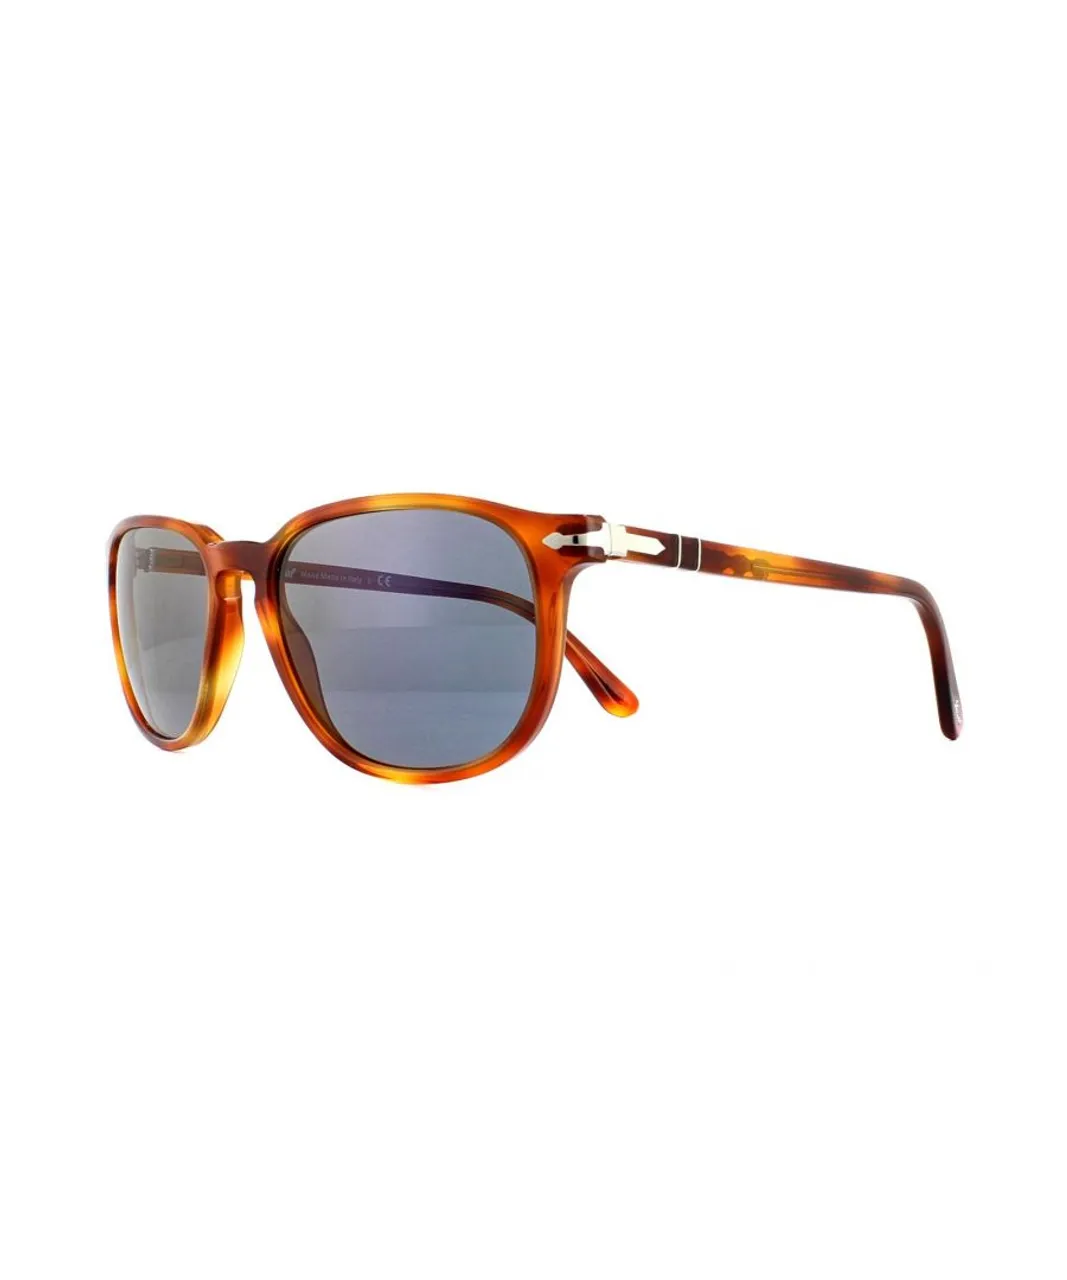 Persol Rectangle Mens Terra Di Siena Light Blue Sunglasses - Brown - One